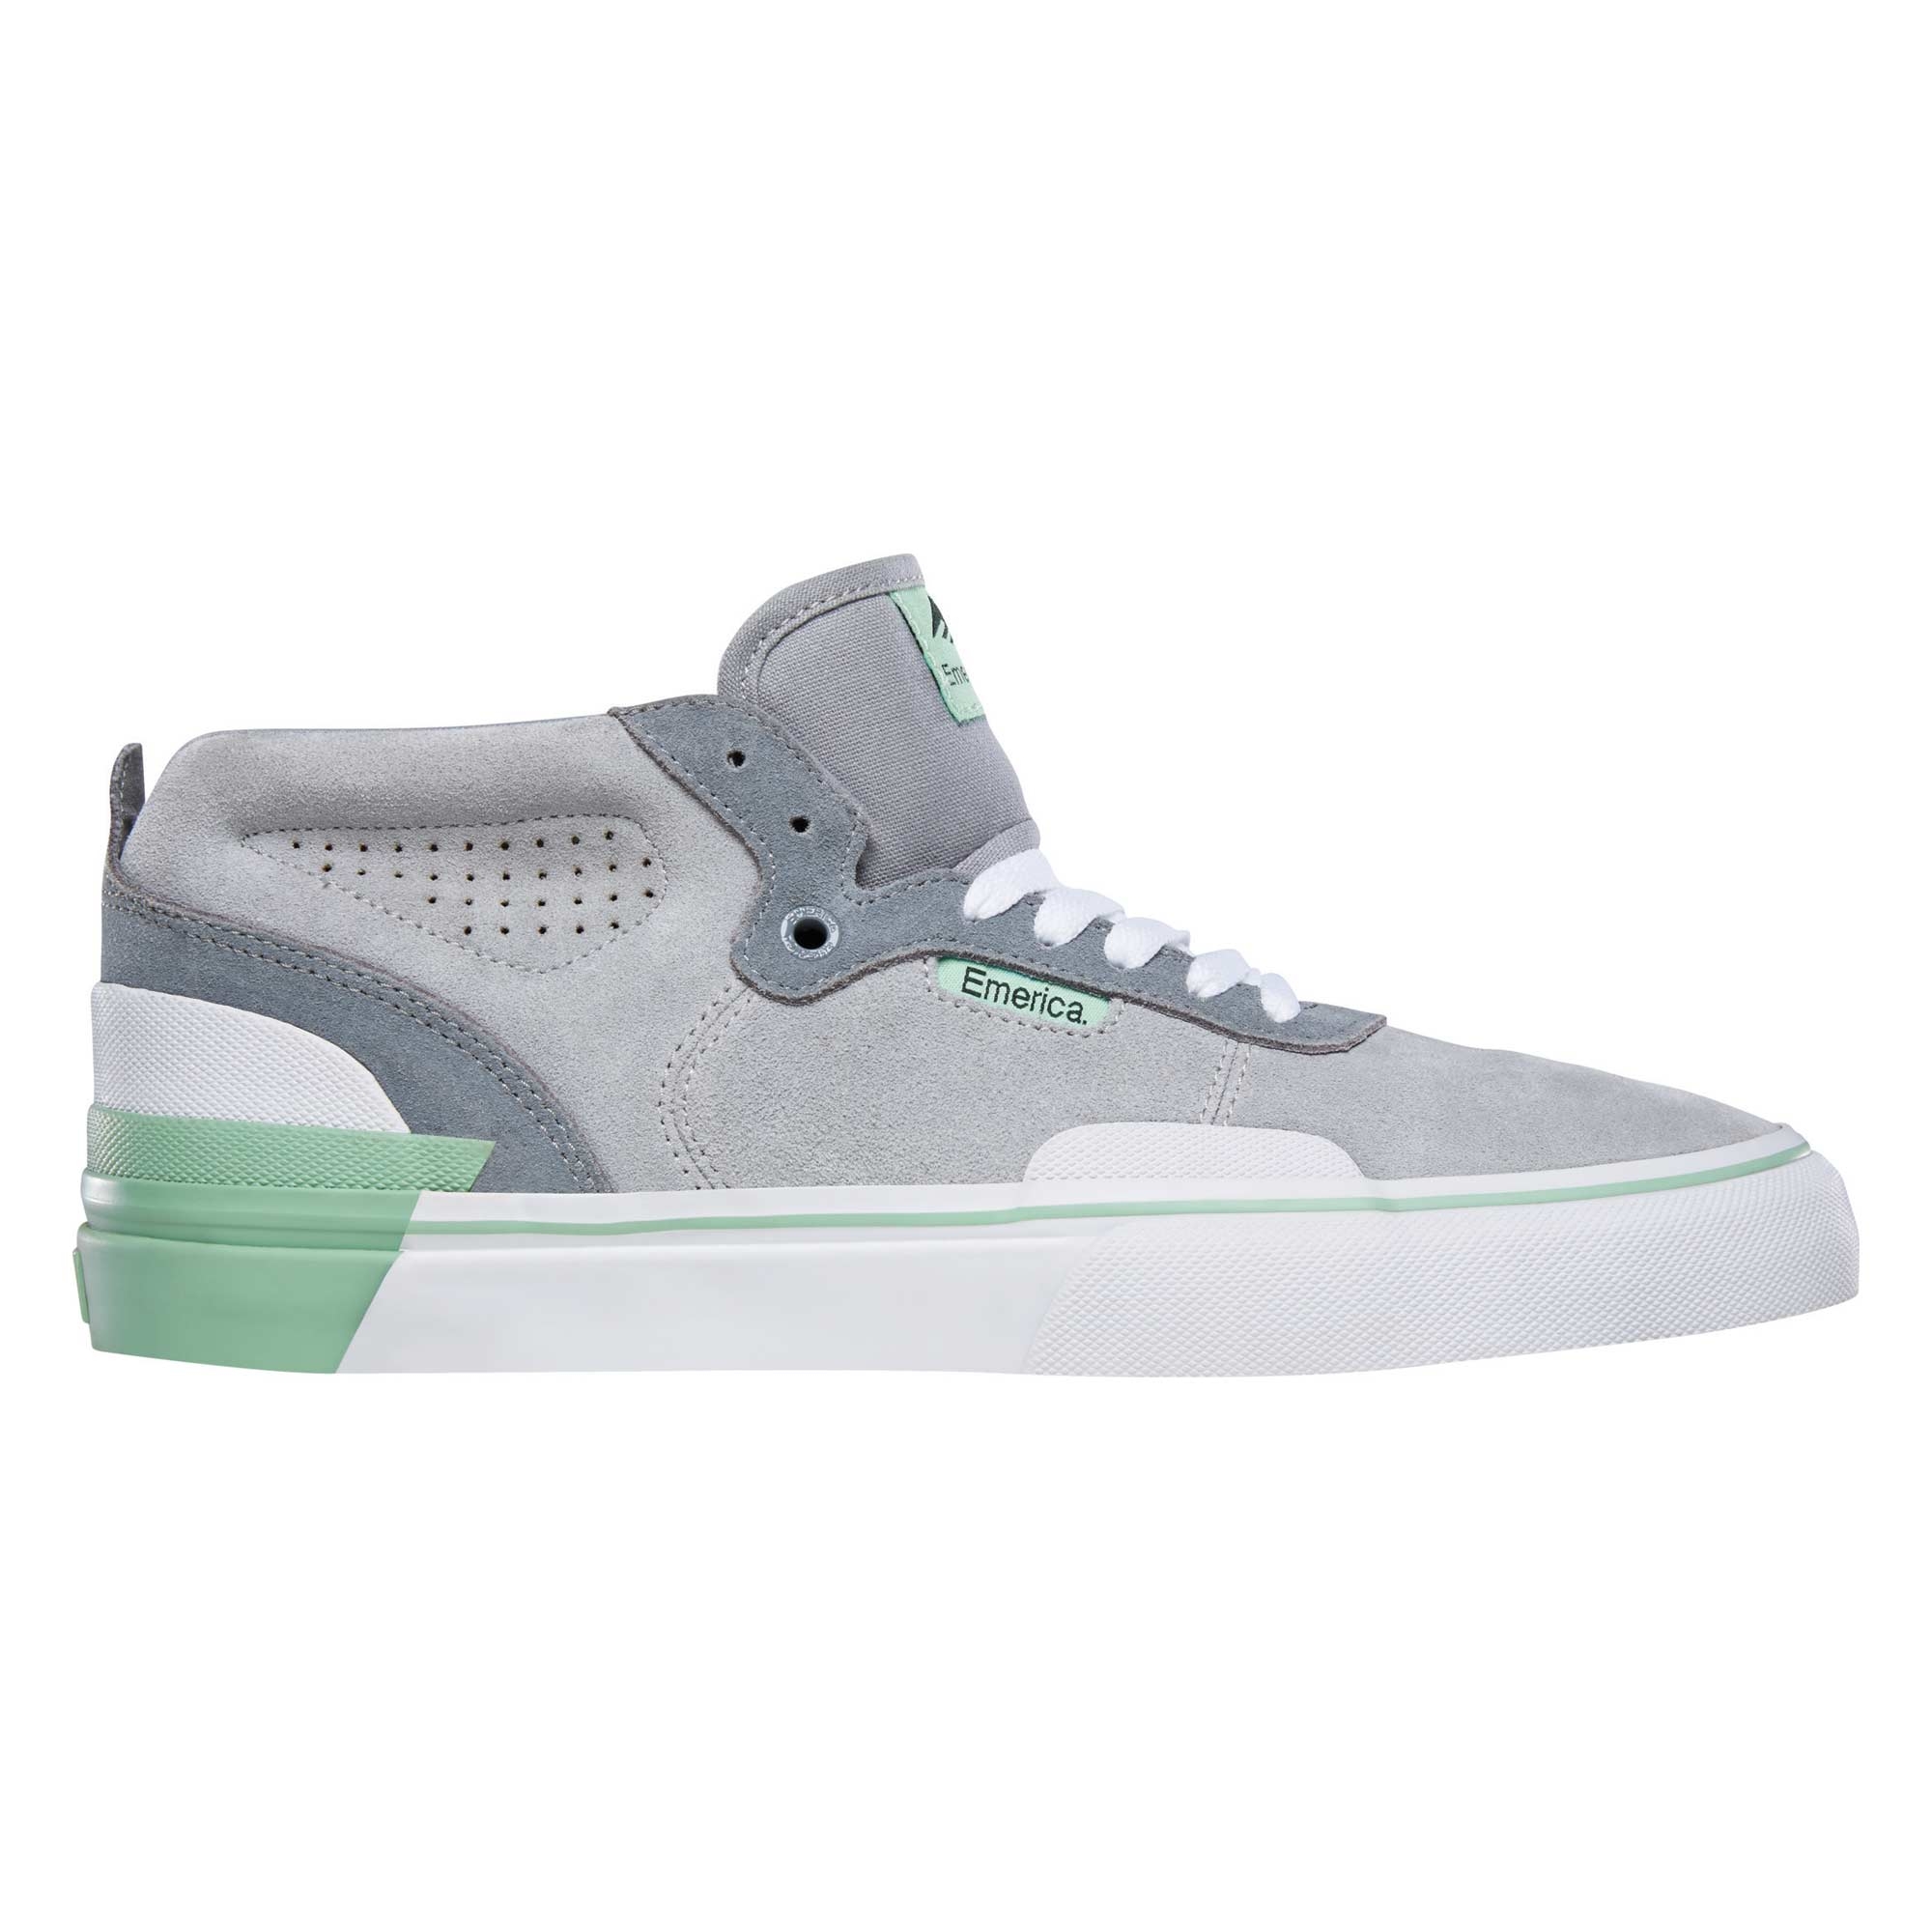 EMERICA Shoe PILLAR gry/whi/gre grey/white/green